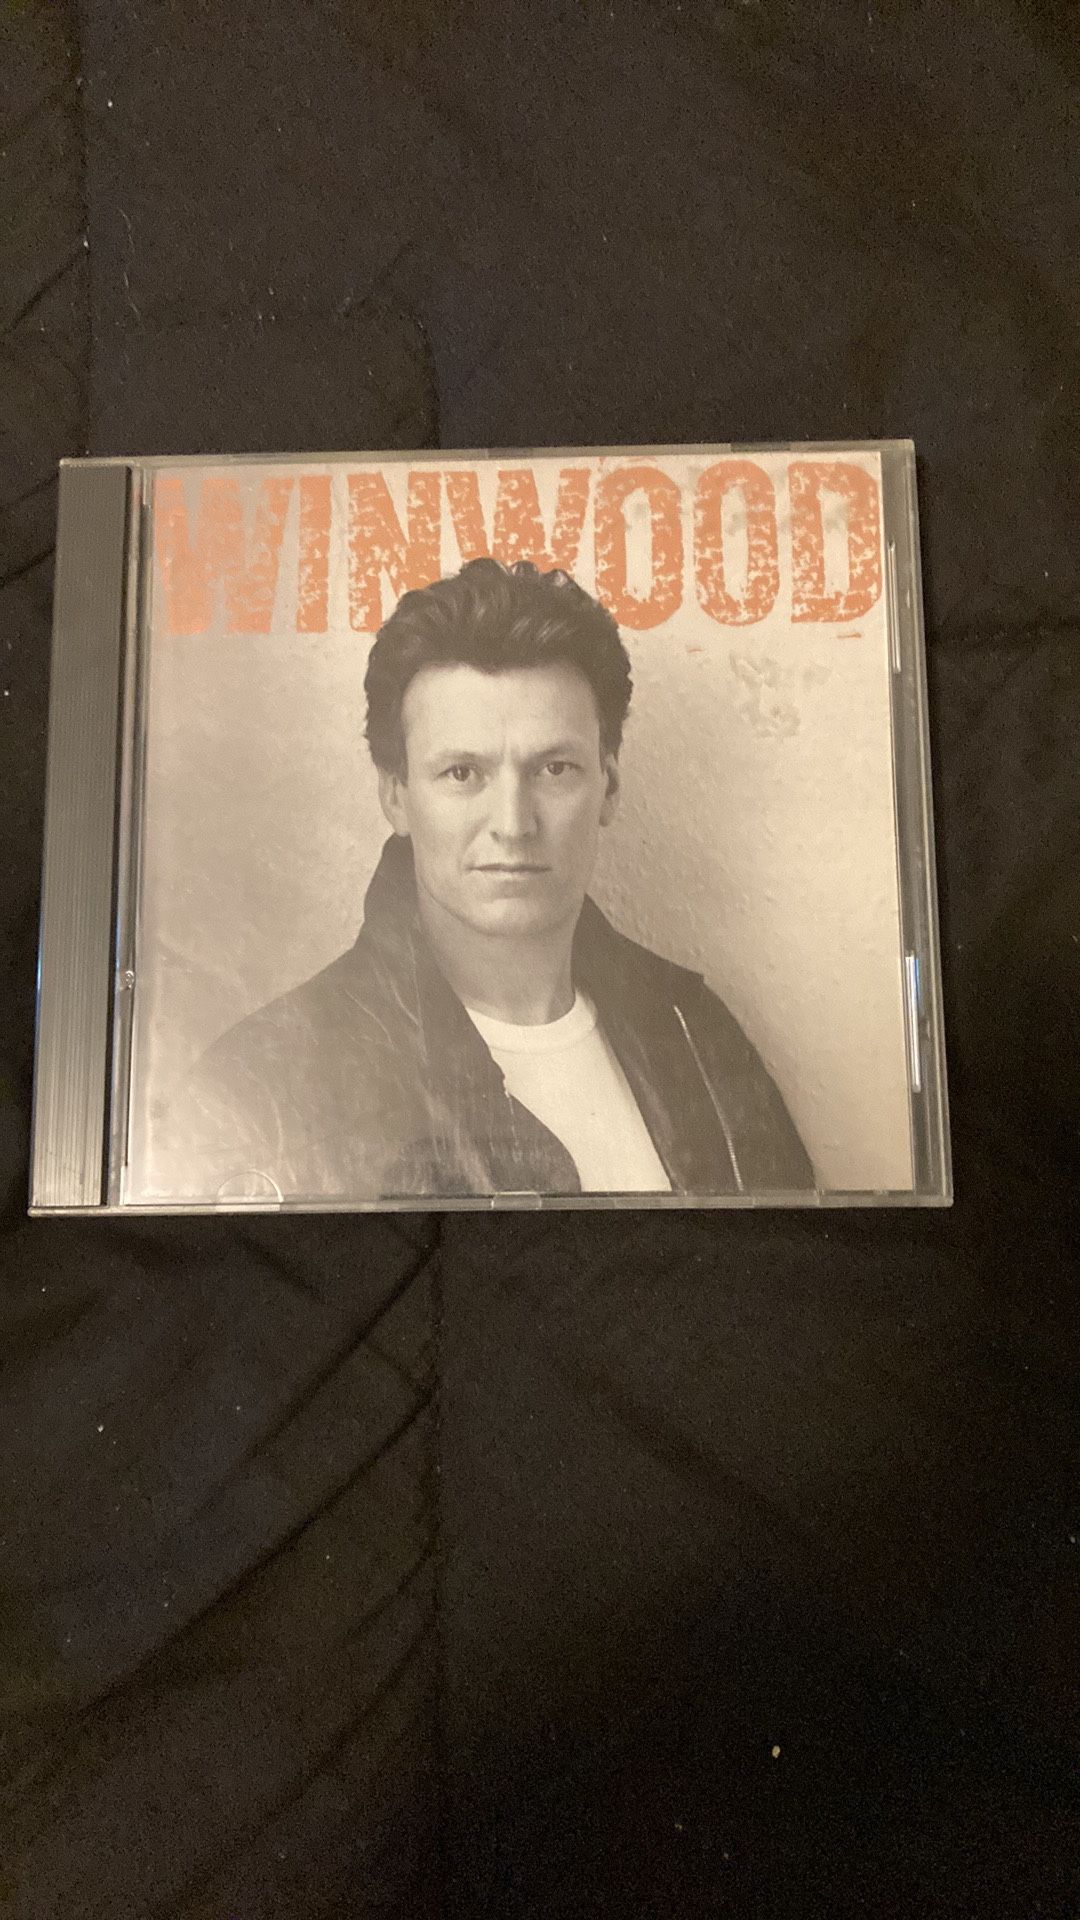 Steve Winwood Roll With It CD